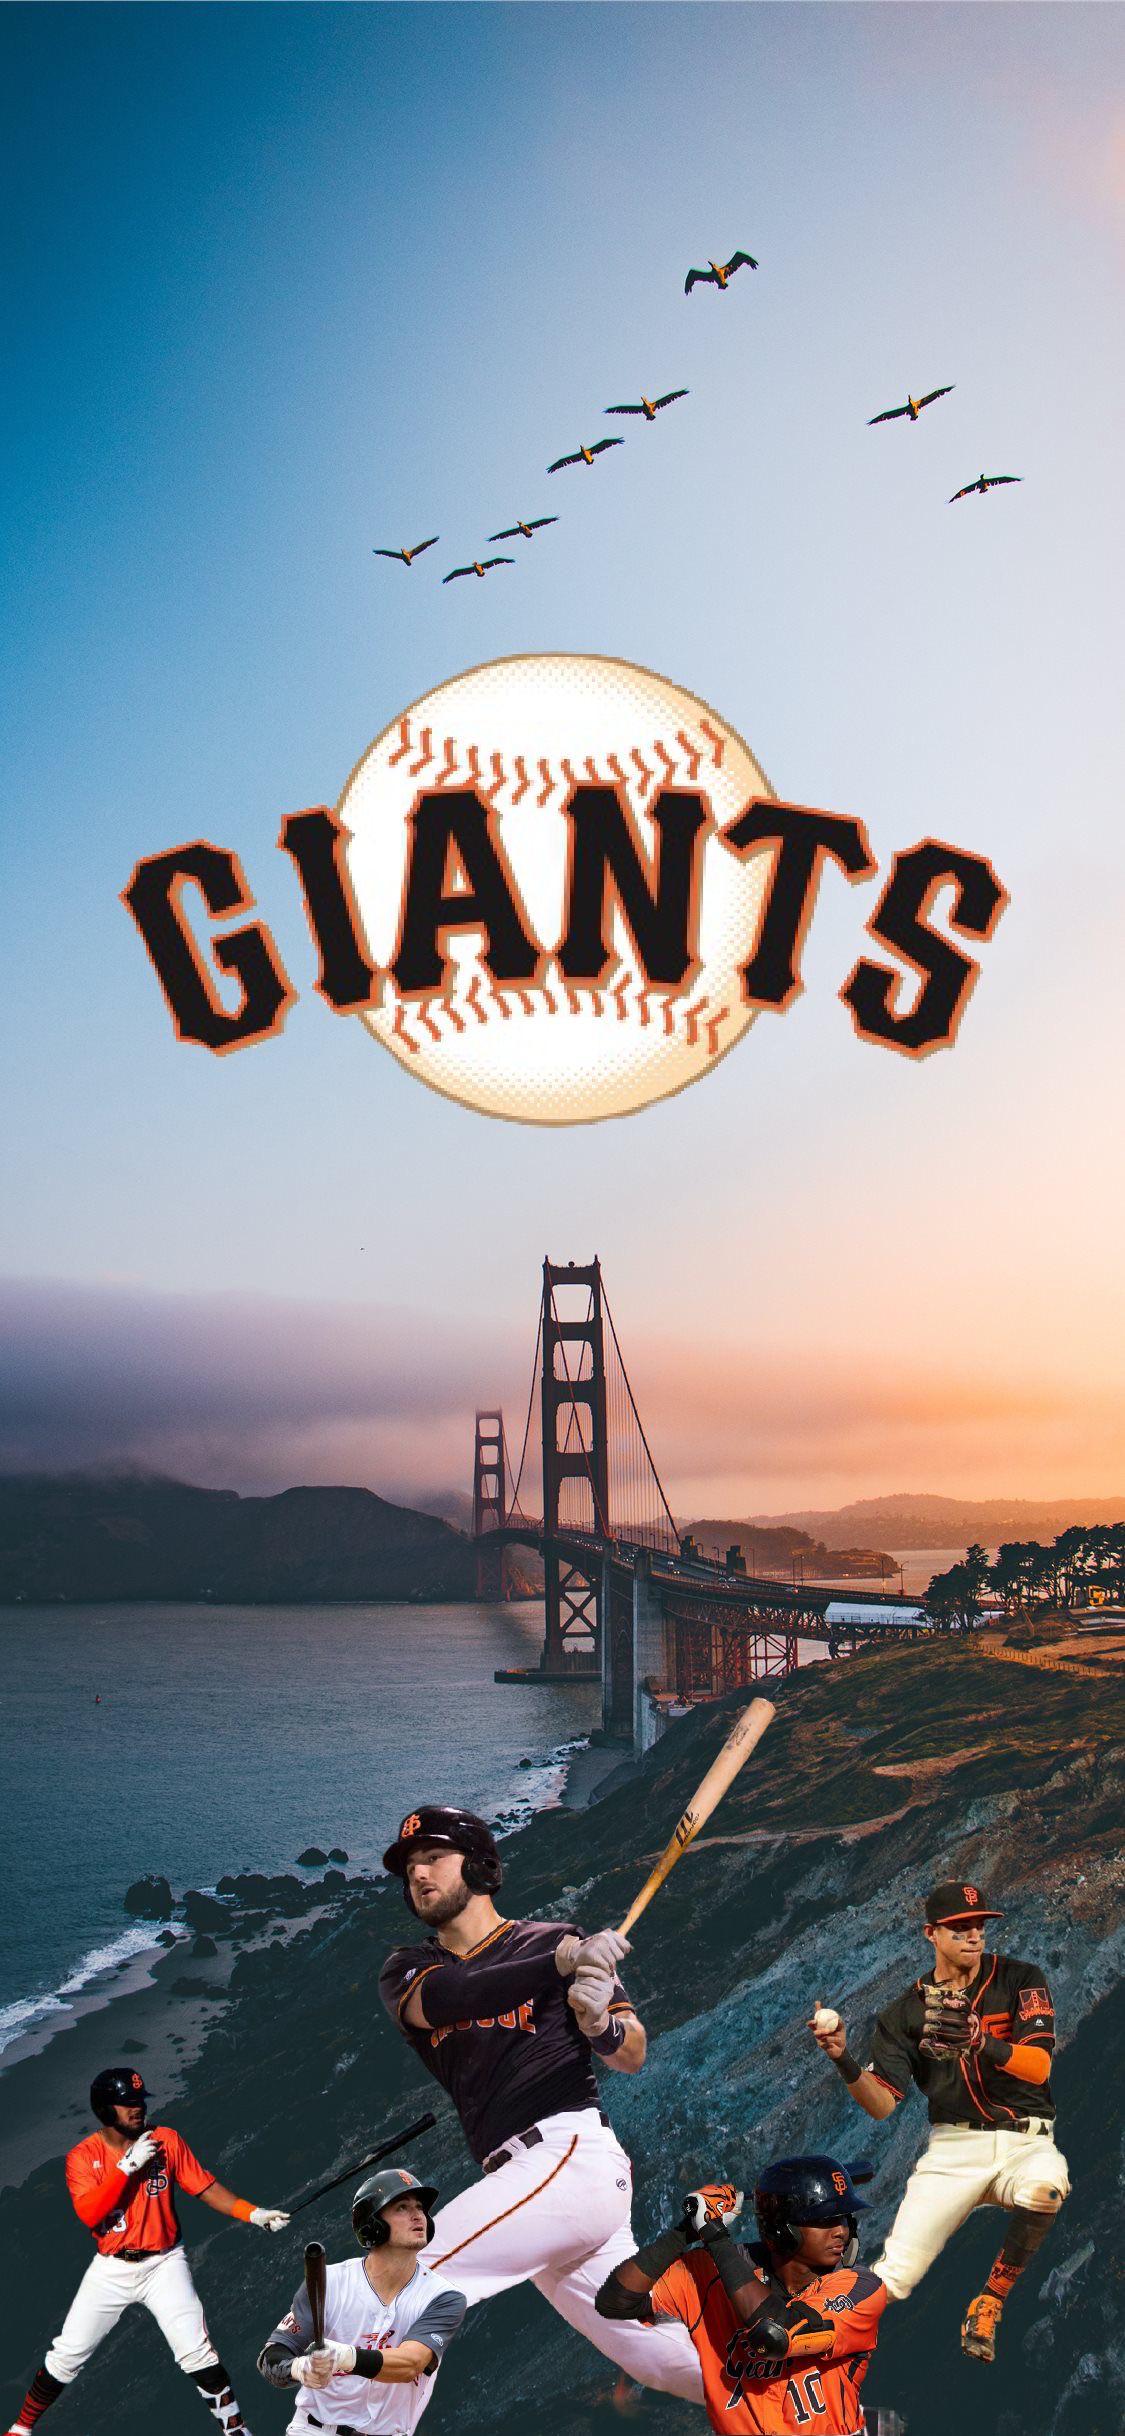 San Francisco Giants wallpaper 3 by hawthorne85 on DeviantArt